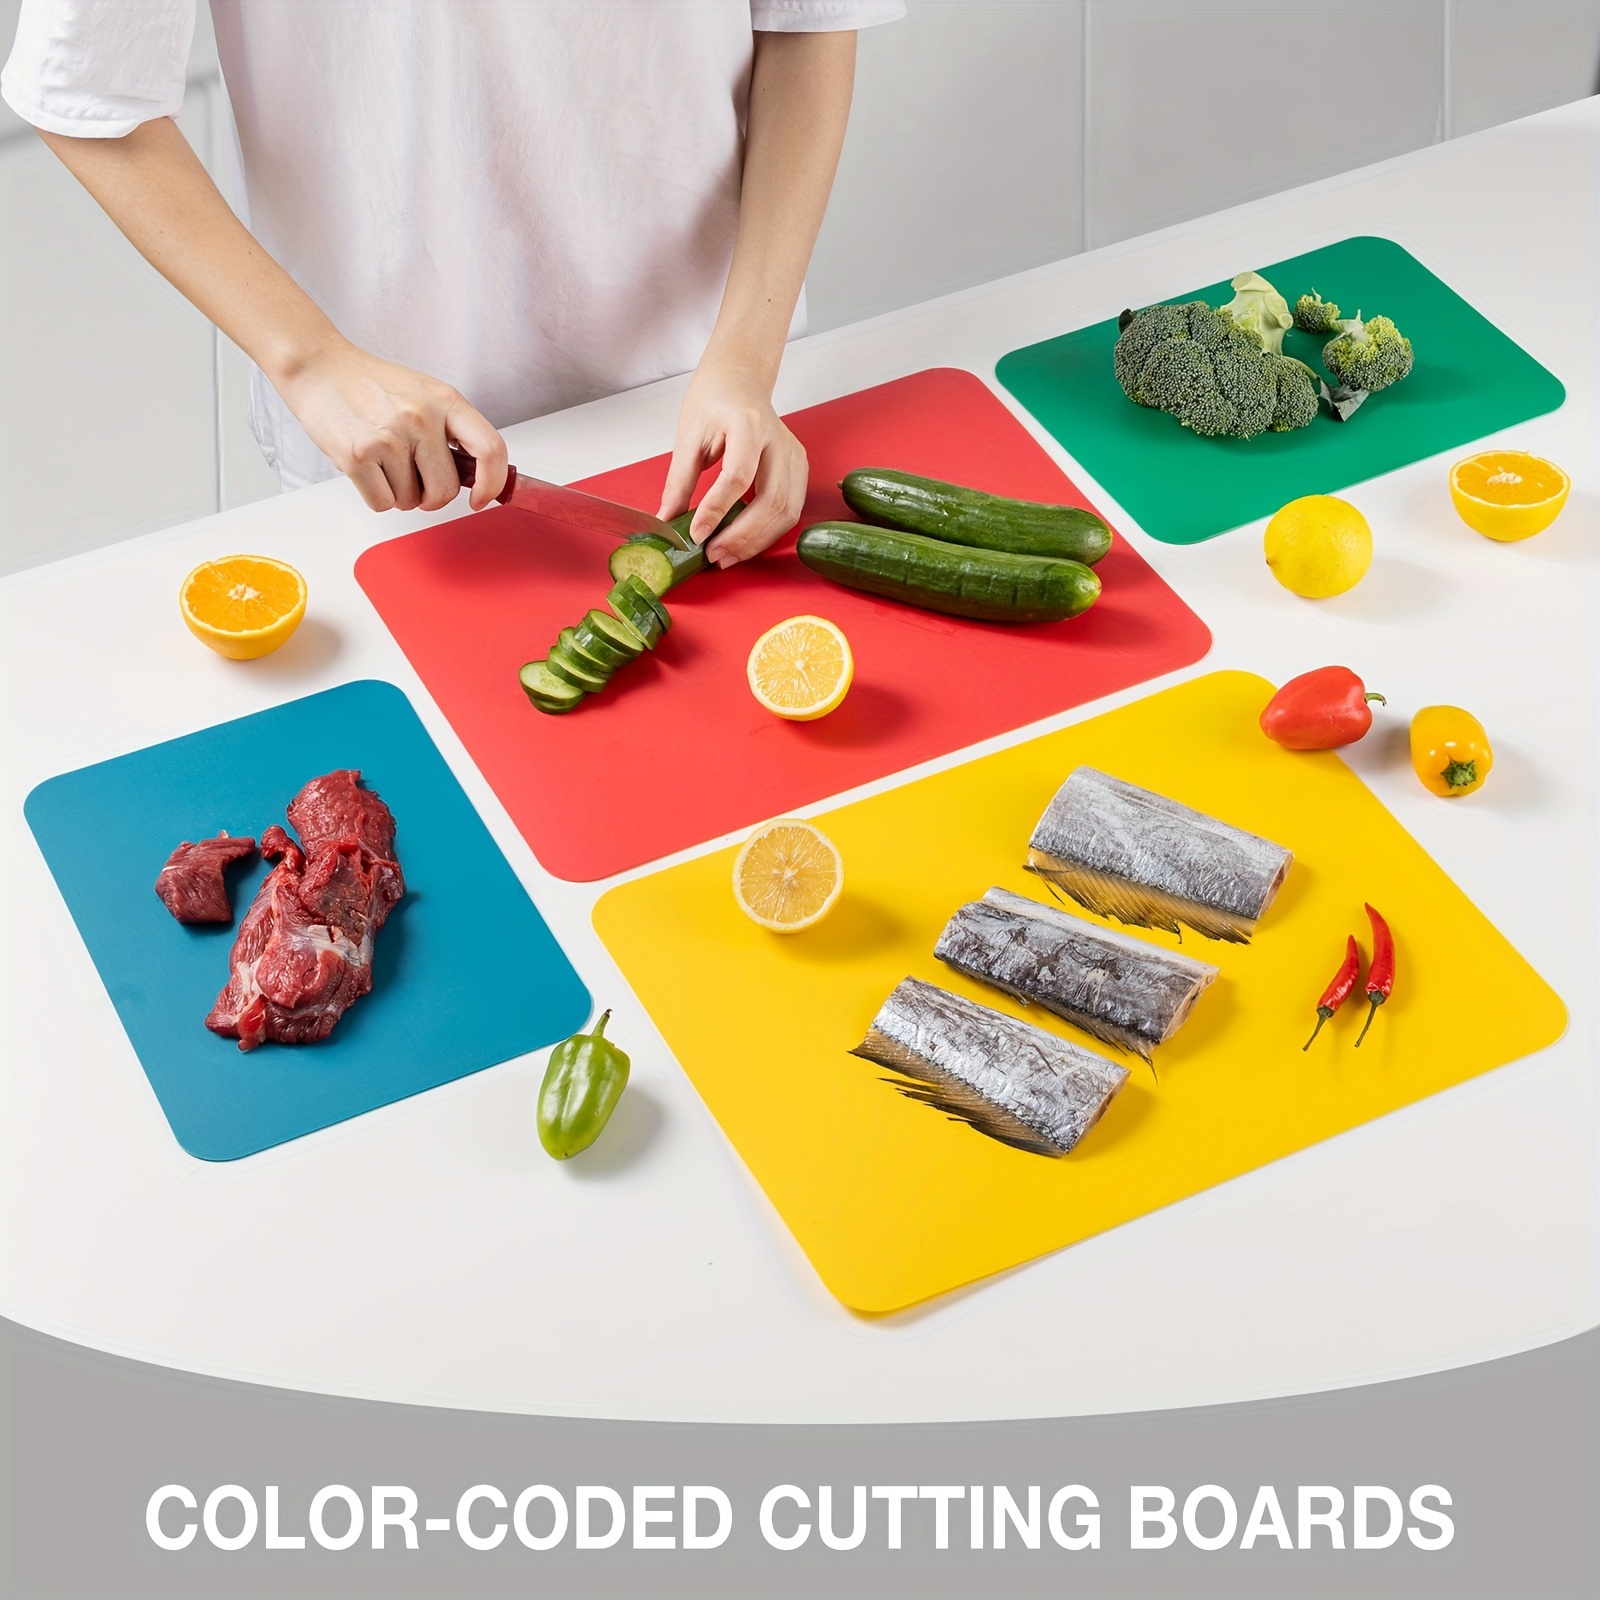 Small Plastic Cutting Boards